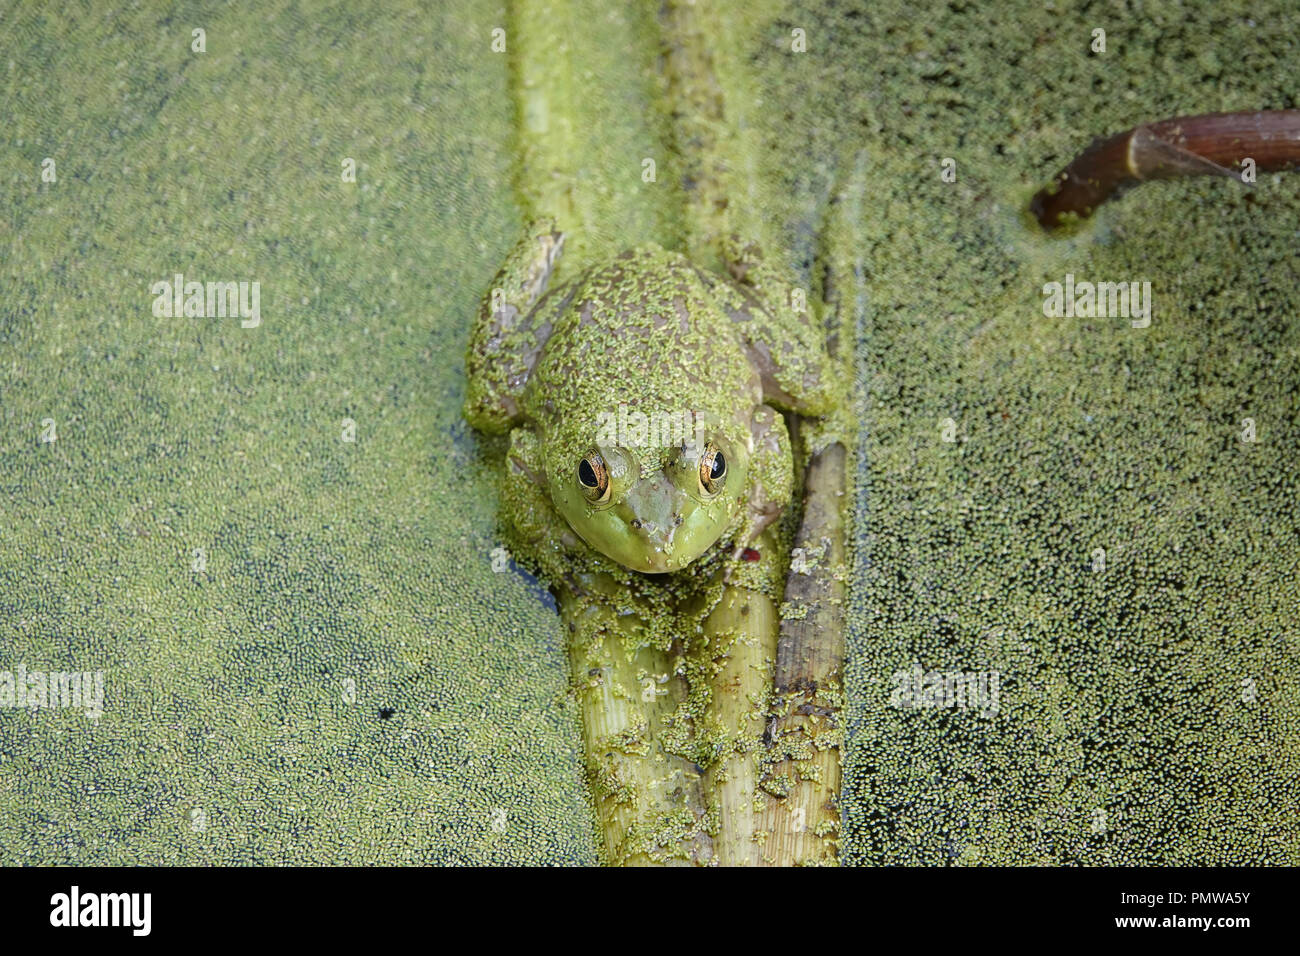 American bullfrog (Lithobates catesbeianus) in un stagno Foto Stock